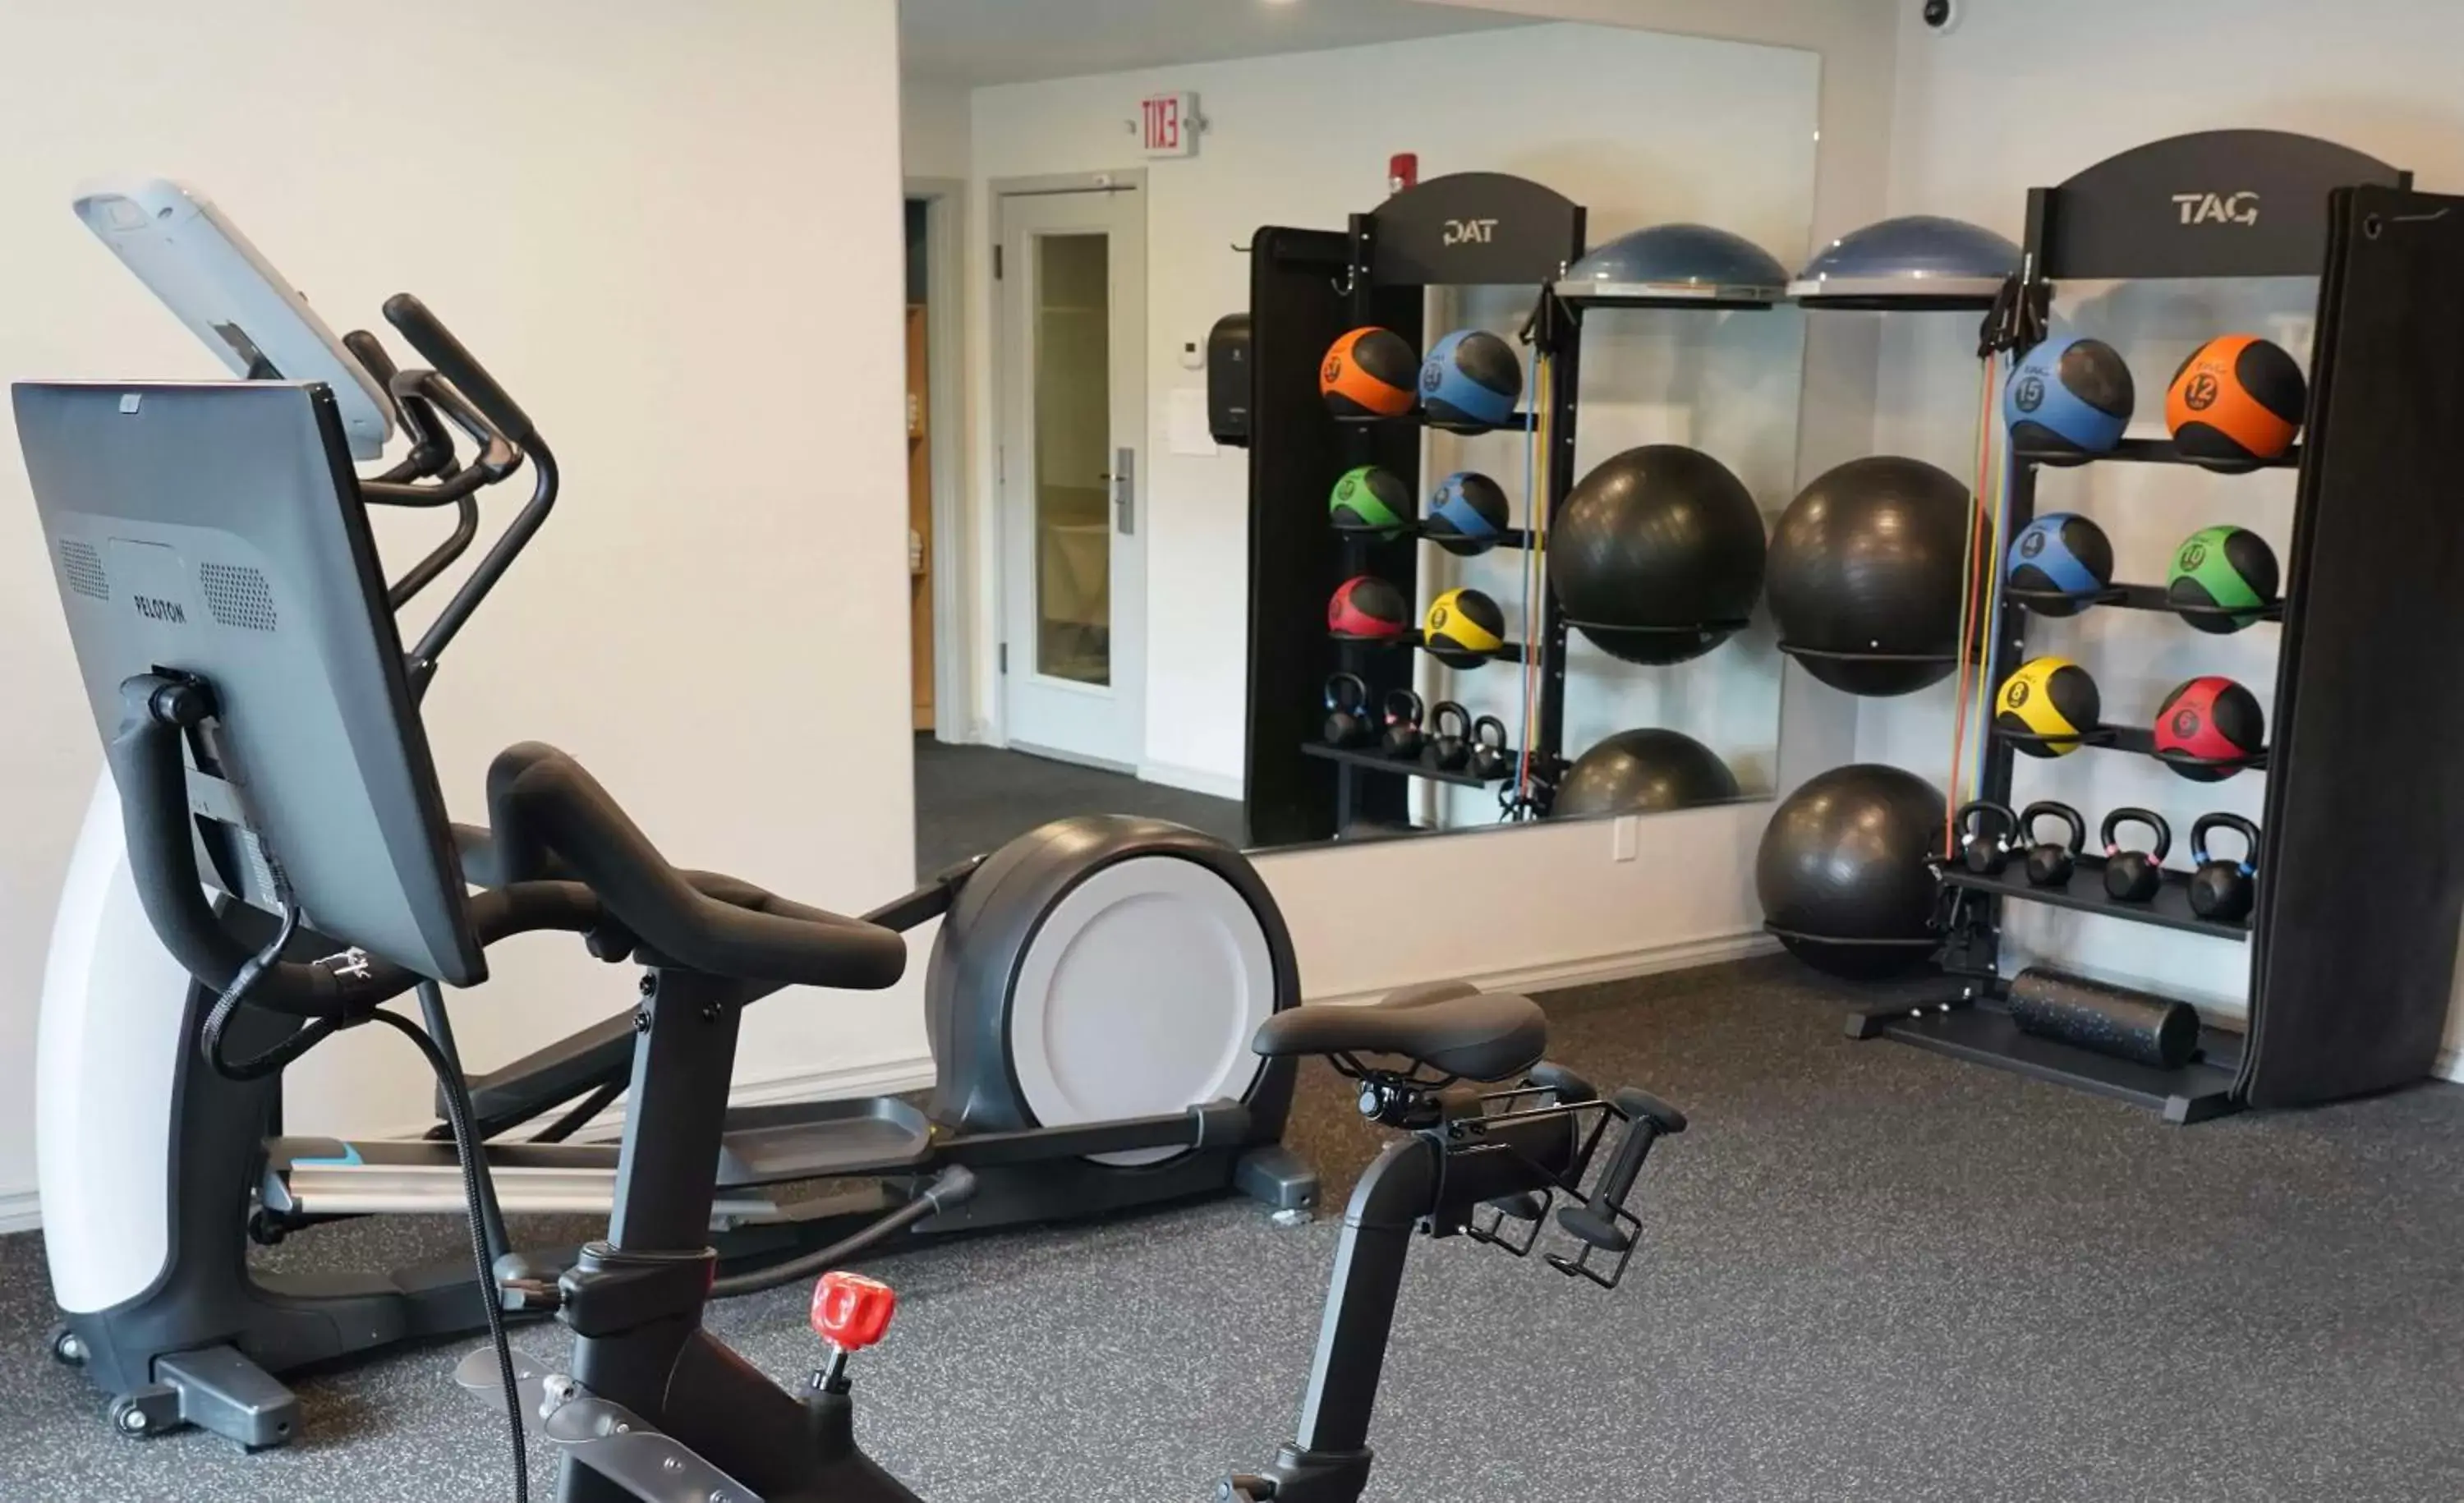 Fitness centre/facilities, Fitness Center/Facilities in Best Western Portland West Beaverton